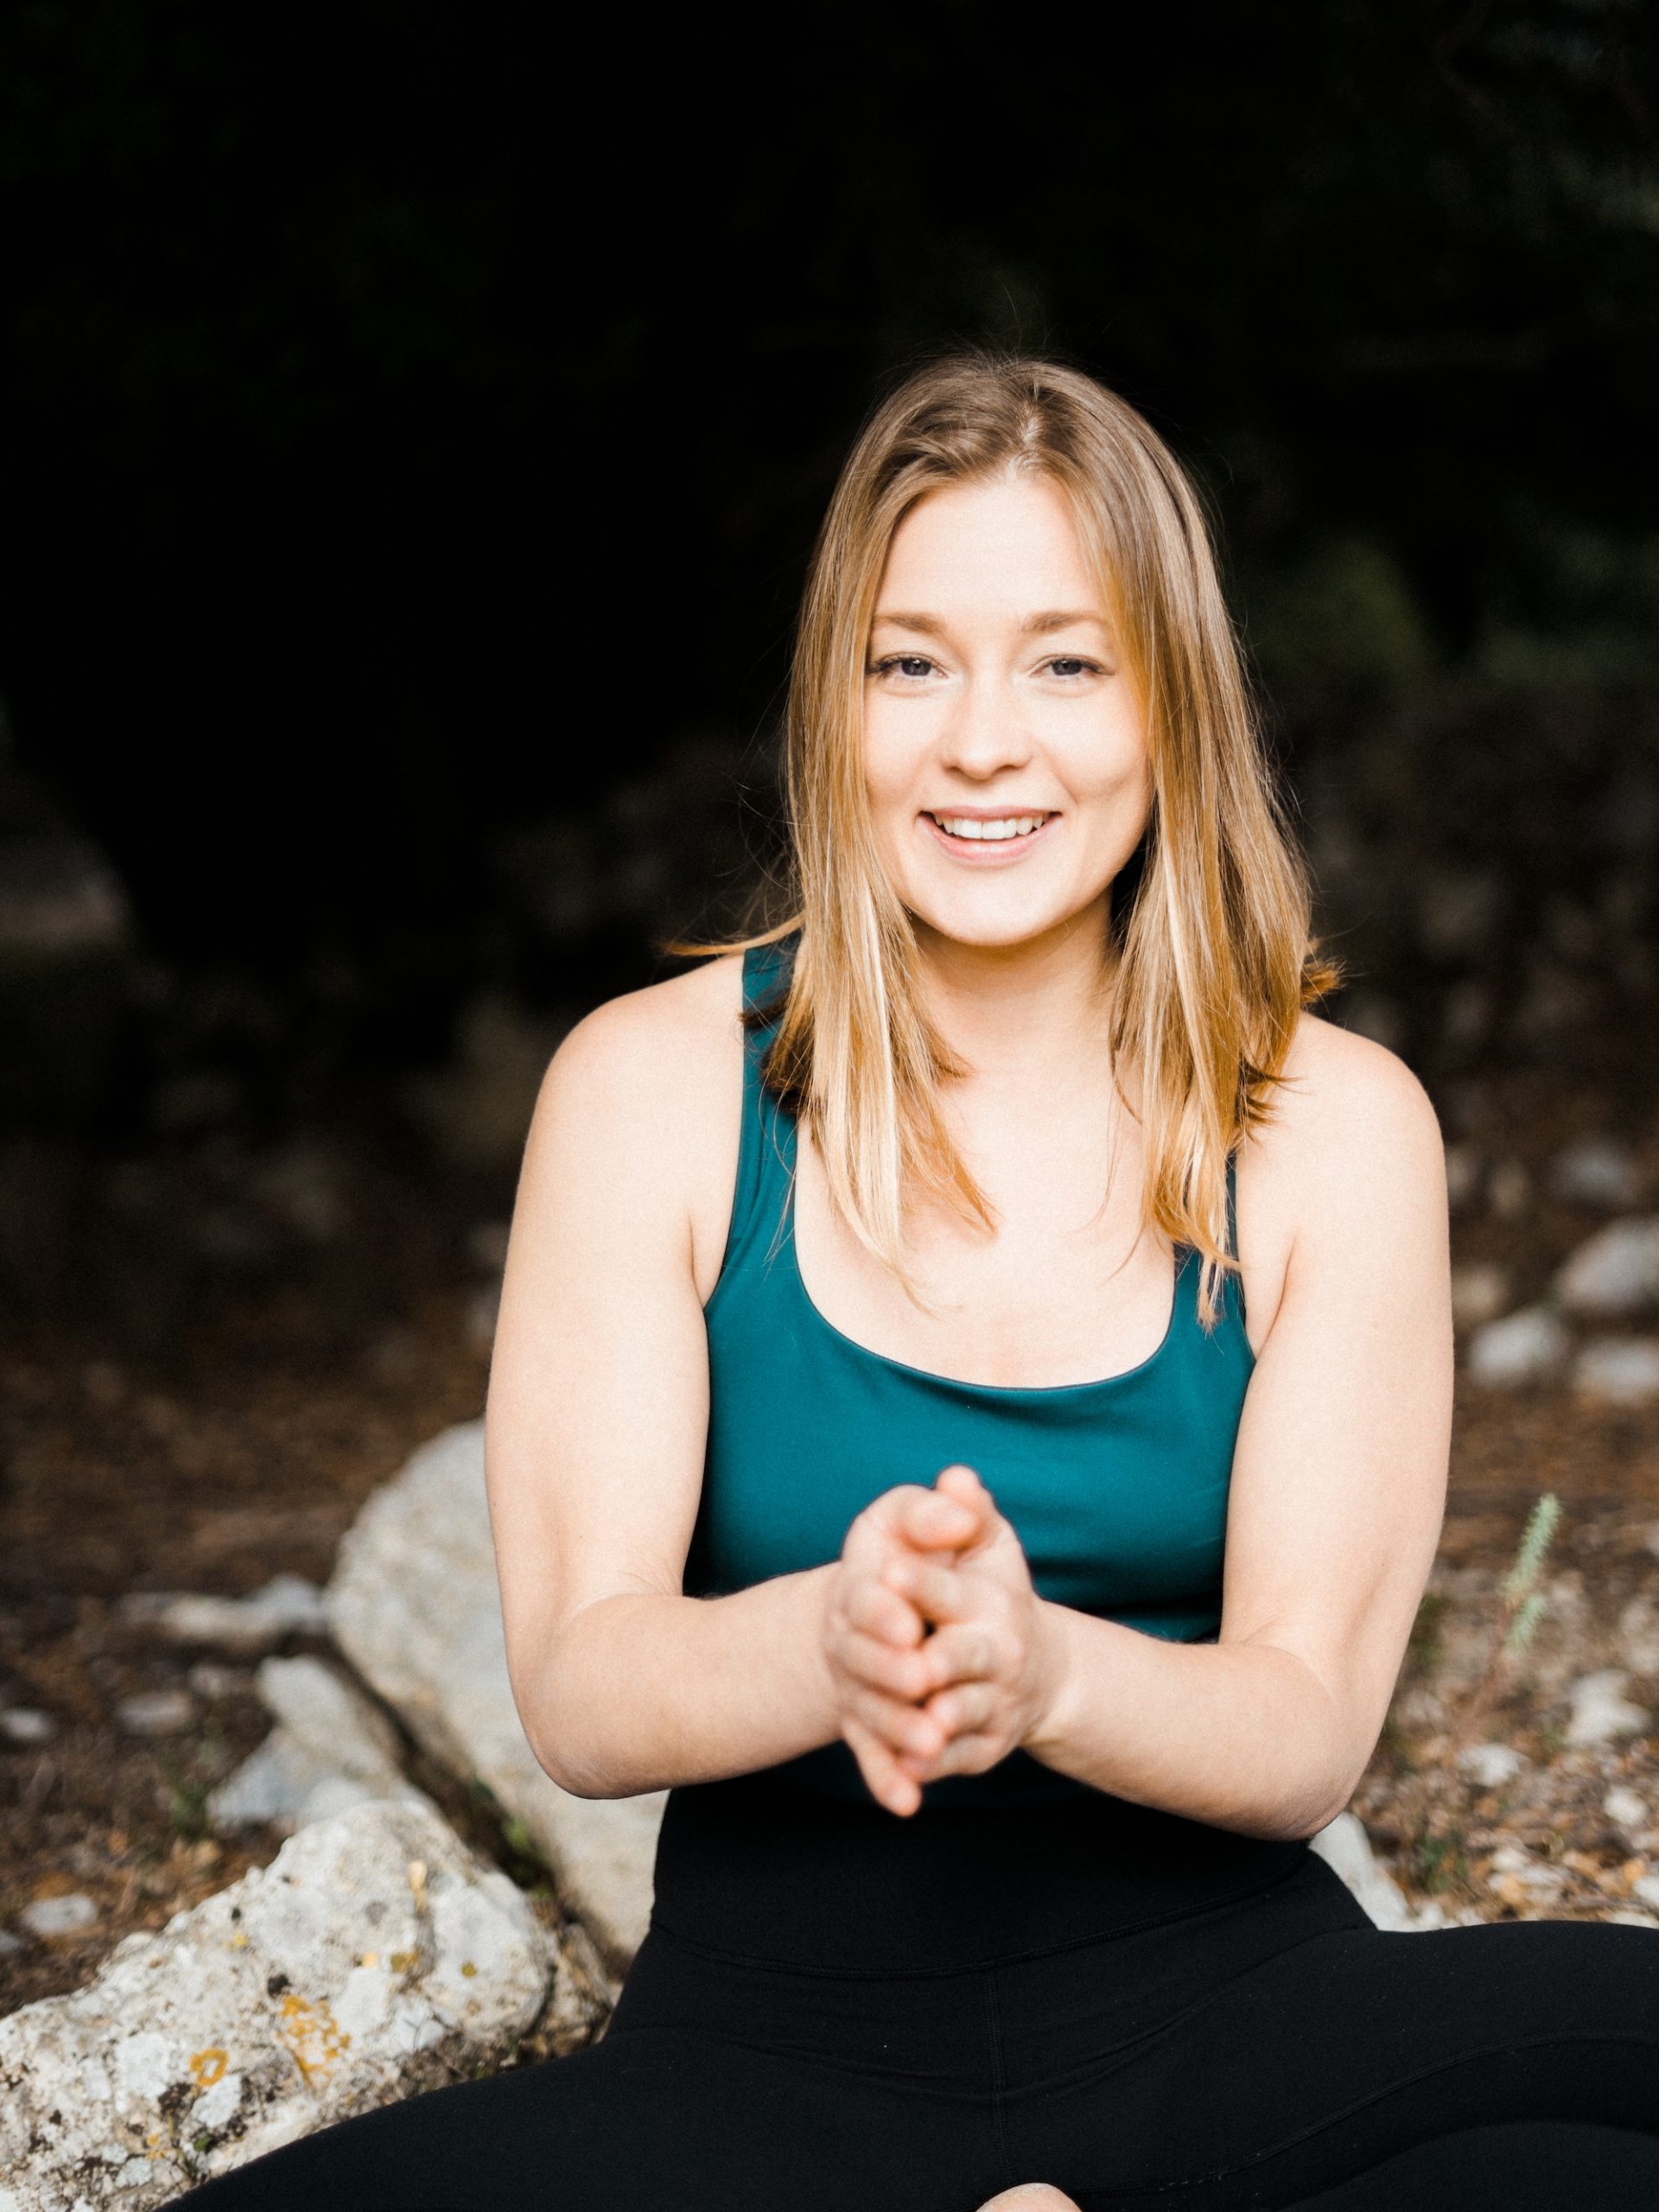 Picture of Francie, a teacher at Pure Flow Yoga's teacher trainings